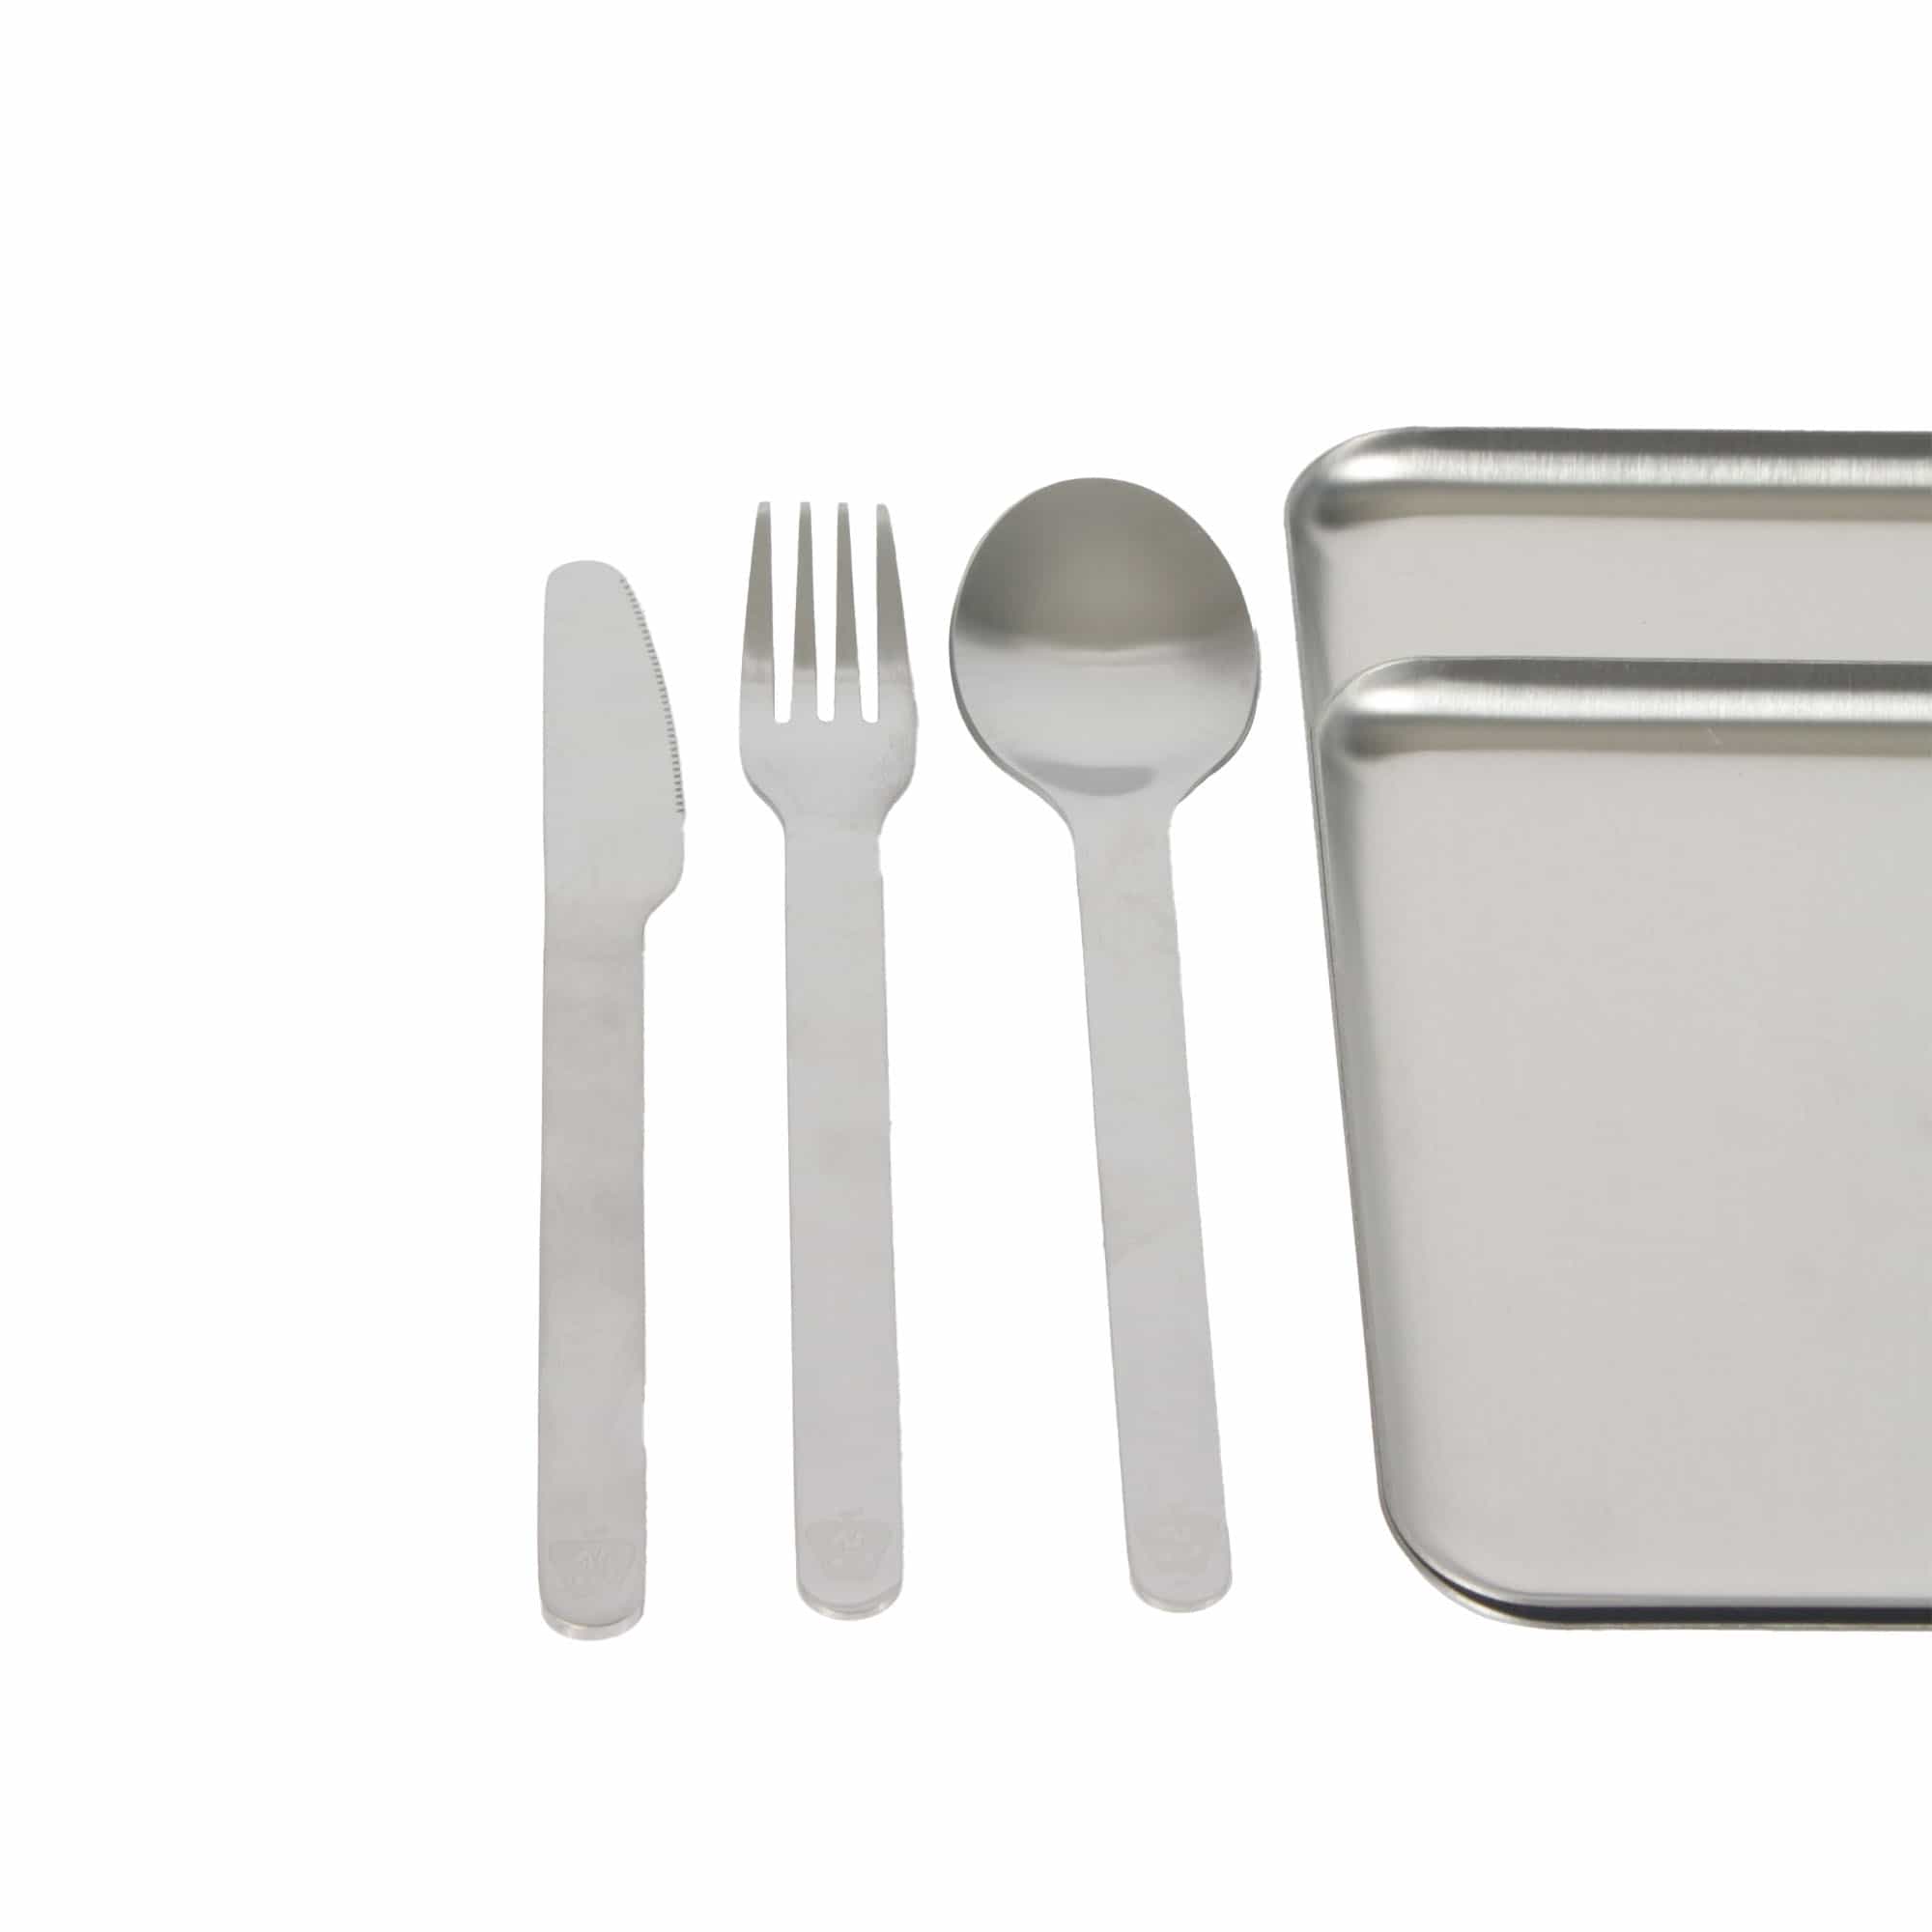 Steel Cutlery Pick Up Stainless Steel Set of 12